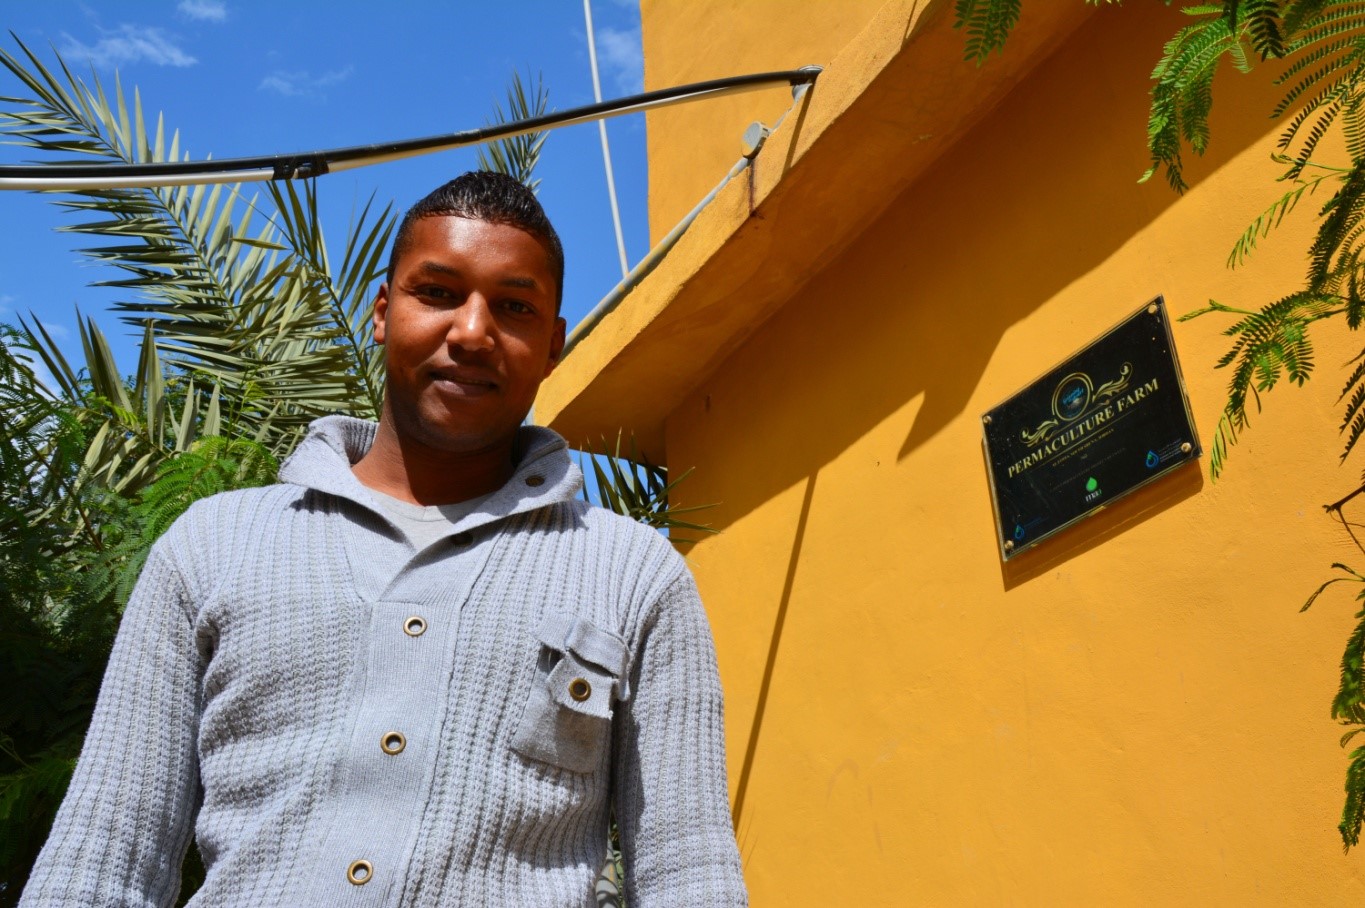 Ali al-Waheidi runs Greening the Desert’s ecolodge and organic cafe. (Marta Vidal/MEE) 